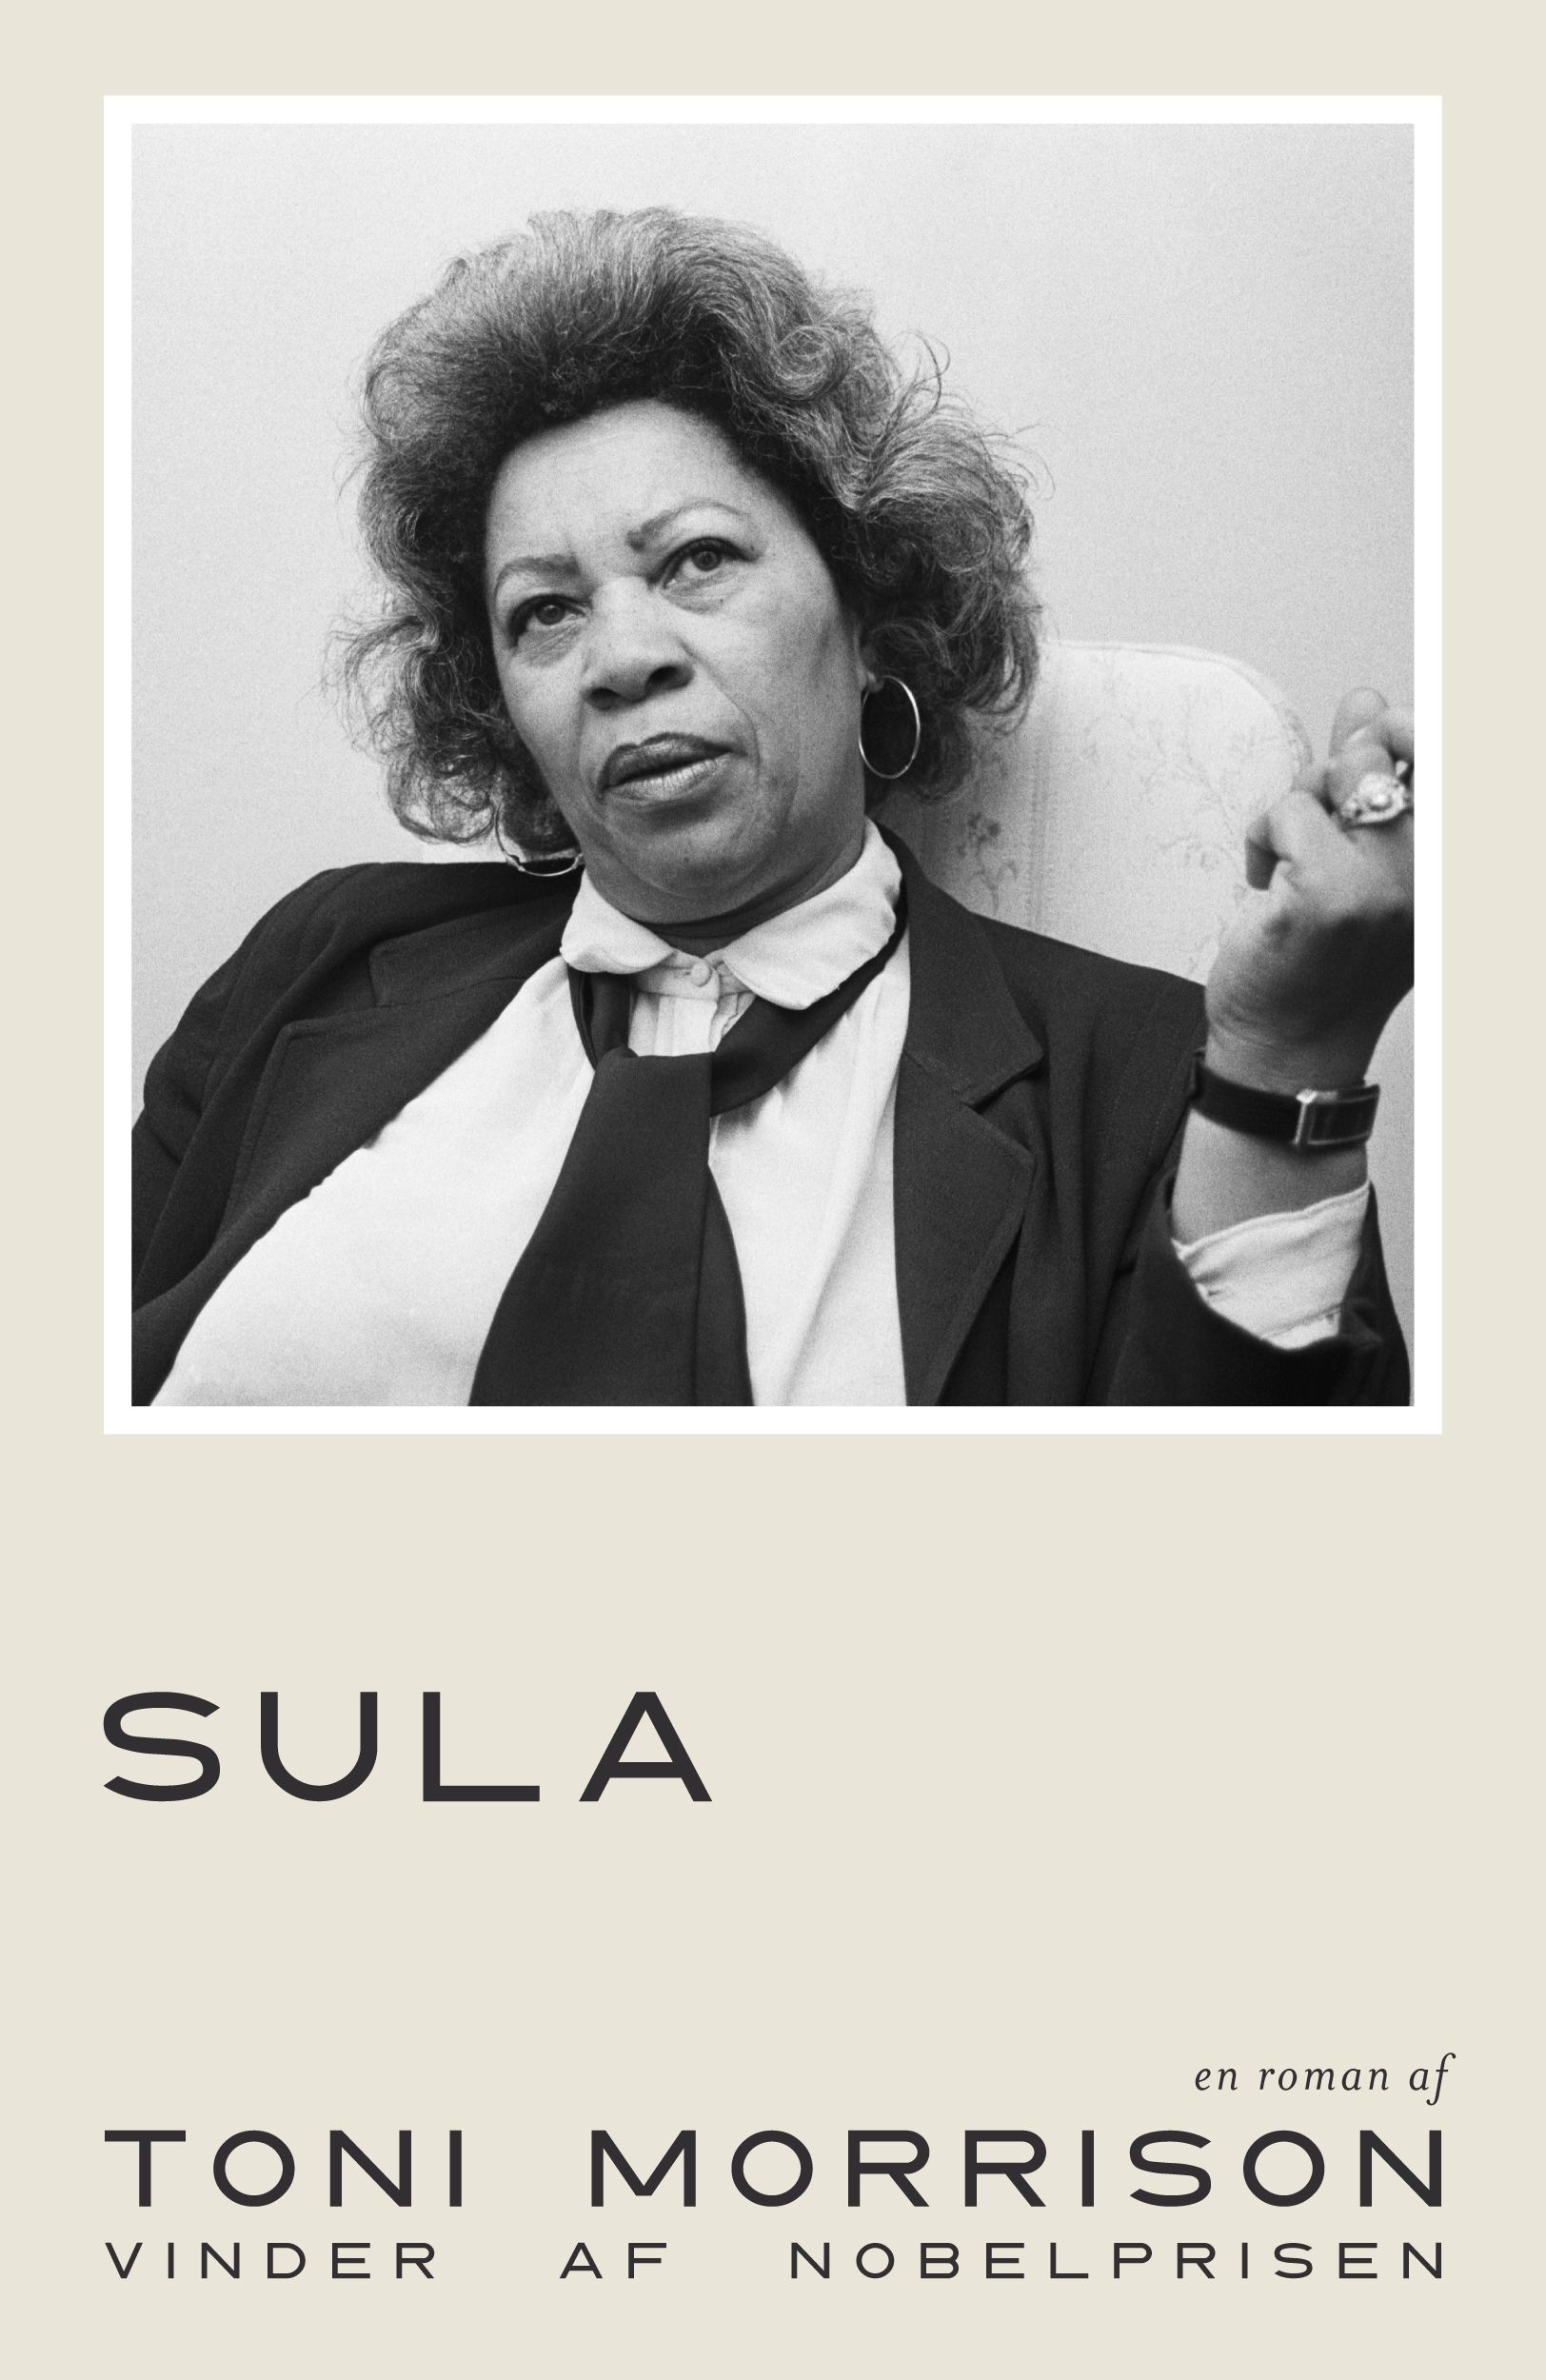 Sula, ljudbok av Toni Morrison